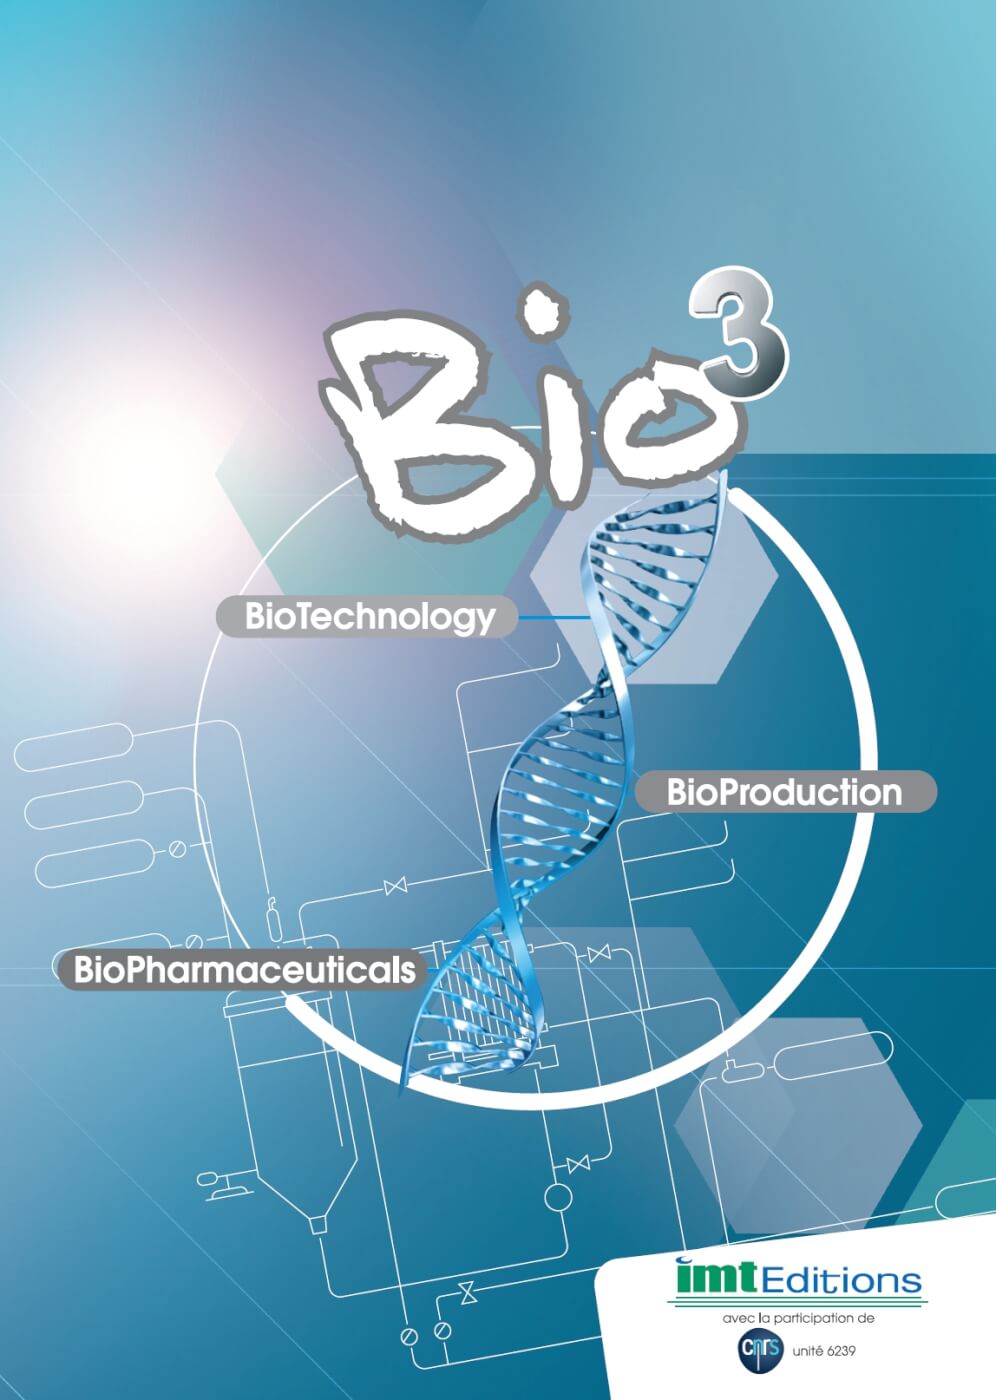 Bio3 : Biotechnology - Bioproduction - Biophramaceuticals